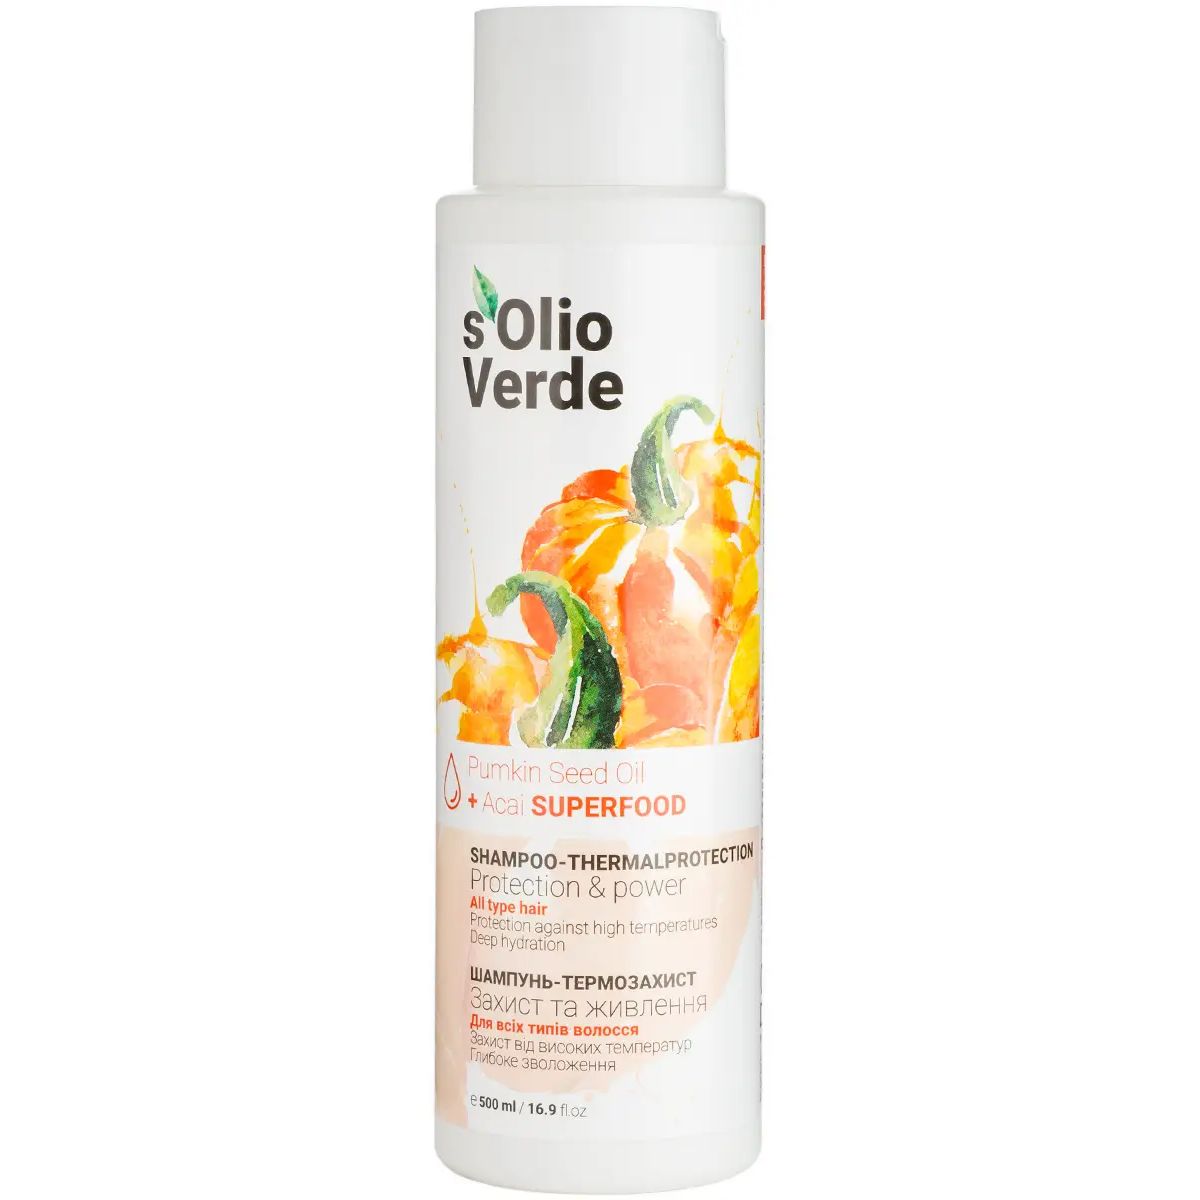 Шампунь-термозащита S'olio Verde Pumpkin Seed Oil для всех типов волос 500 мл - фото 1